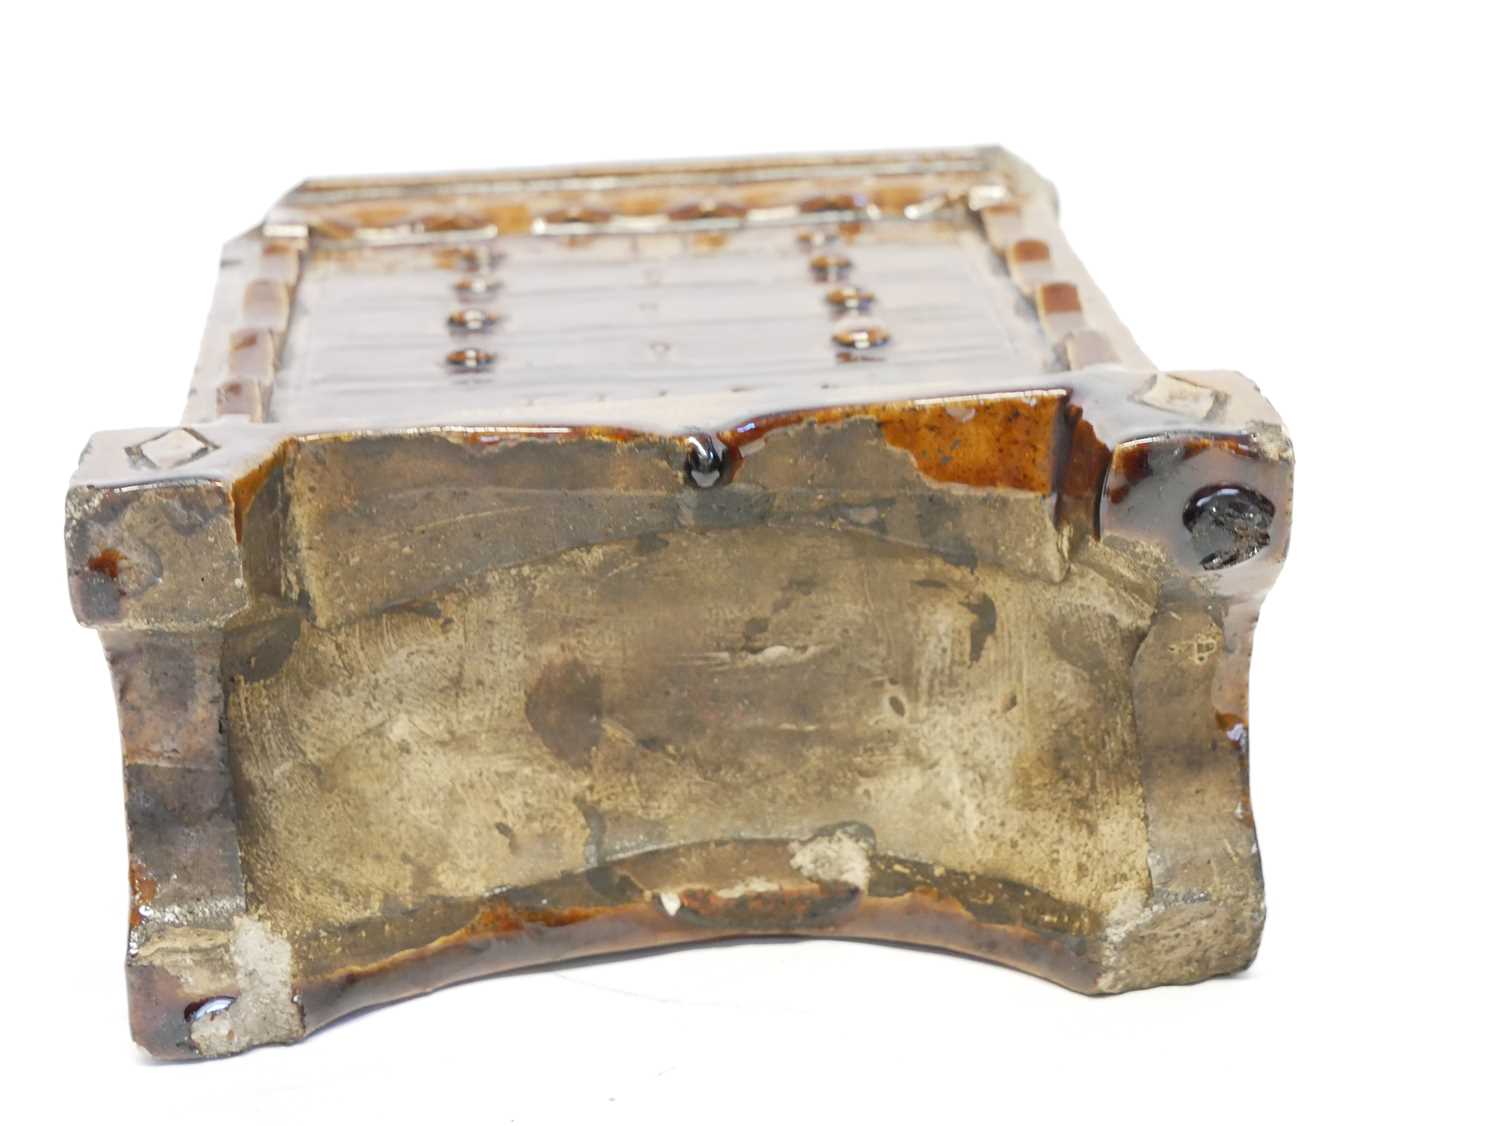 Treacle glaze chest of drawers money box - Image 6 of 6